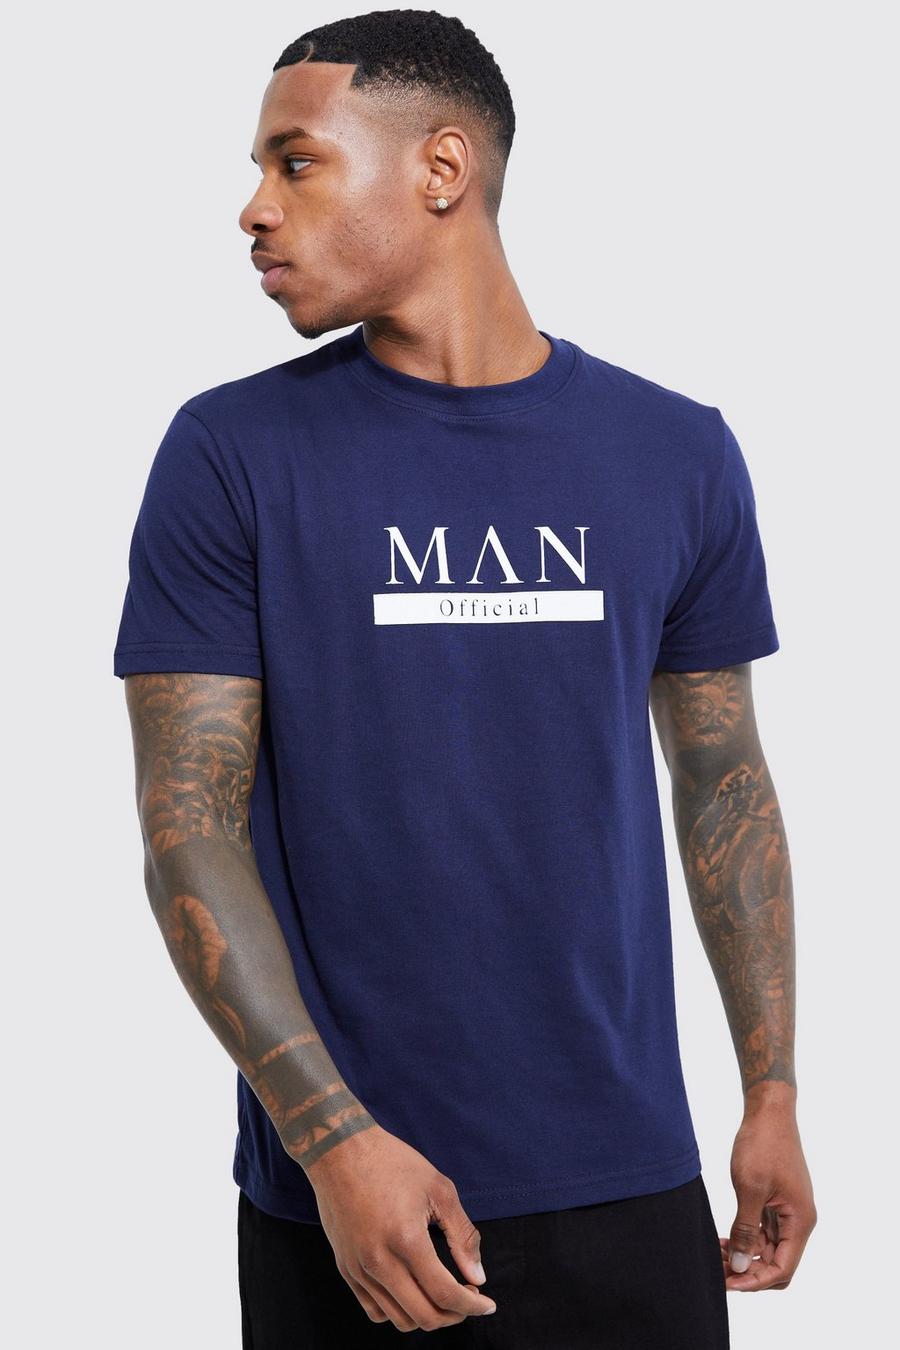 Navy marine Man Gold Slim Fit Official T-shirt